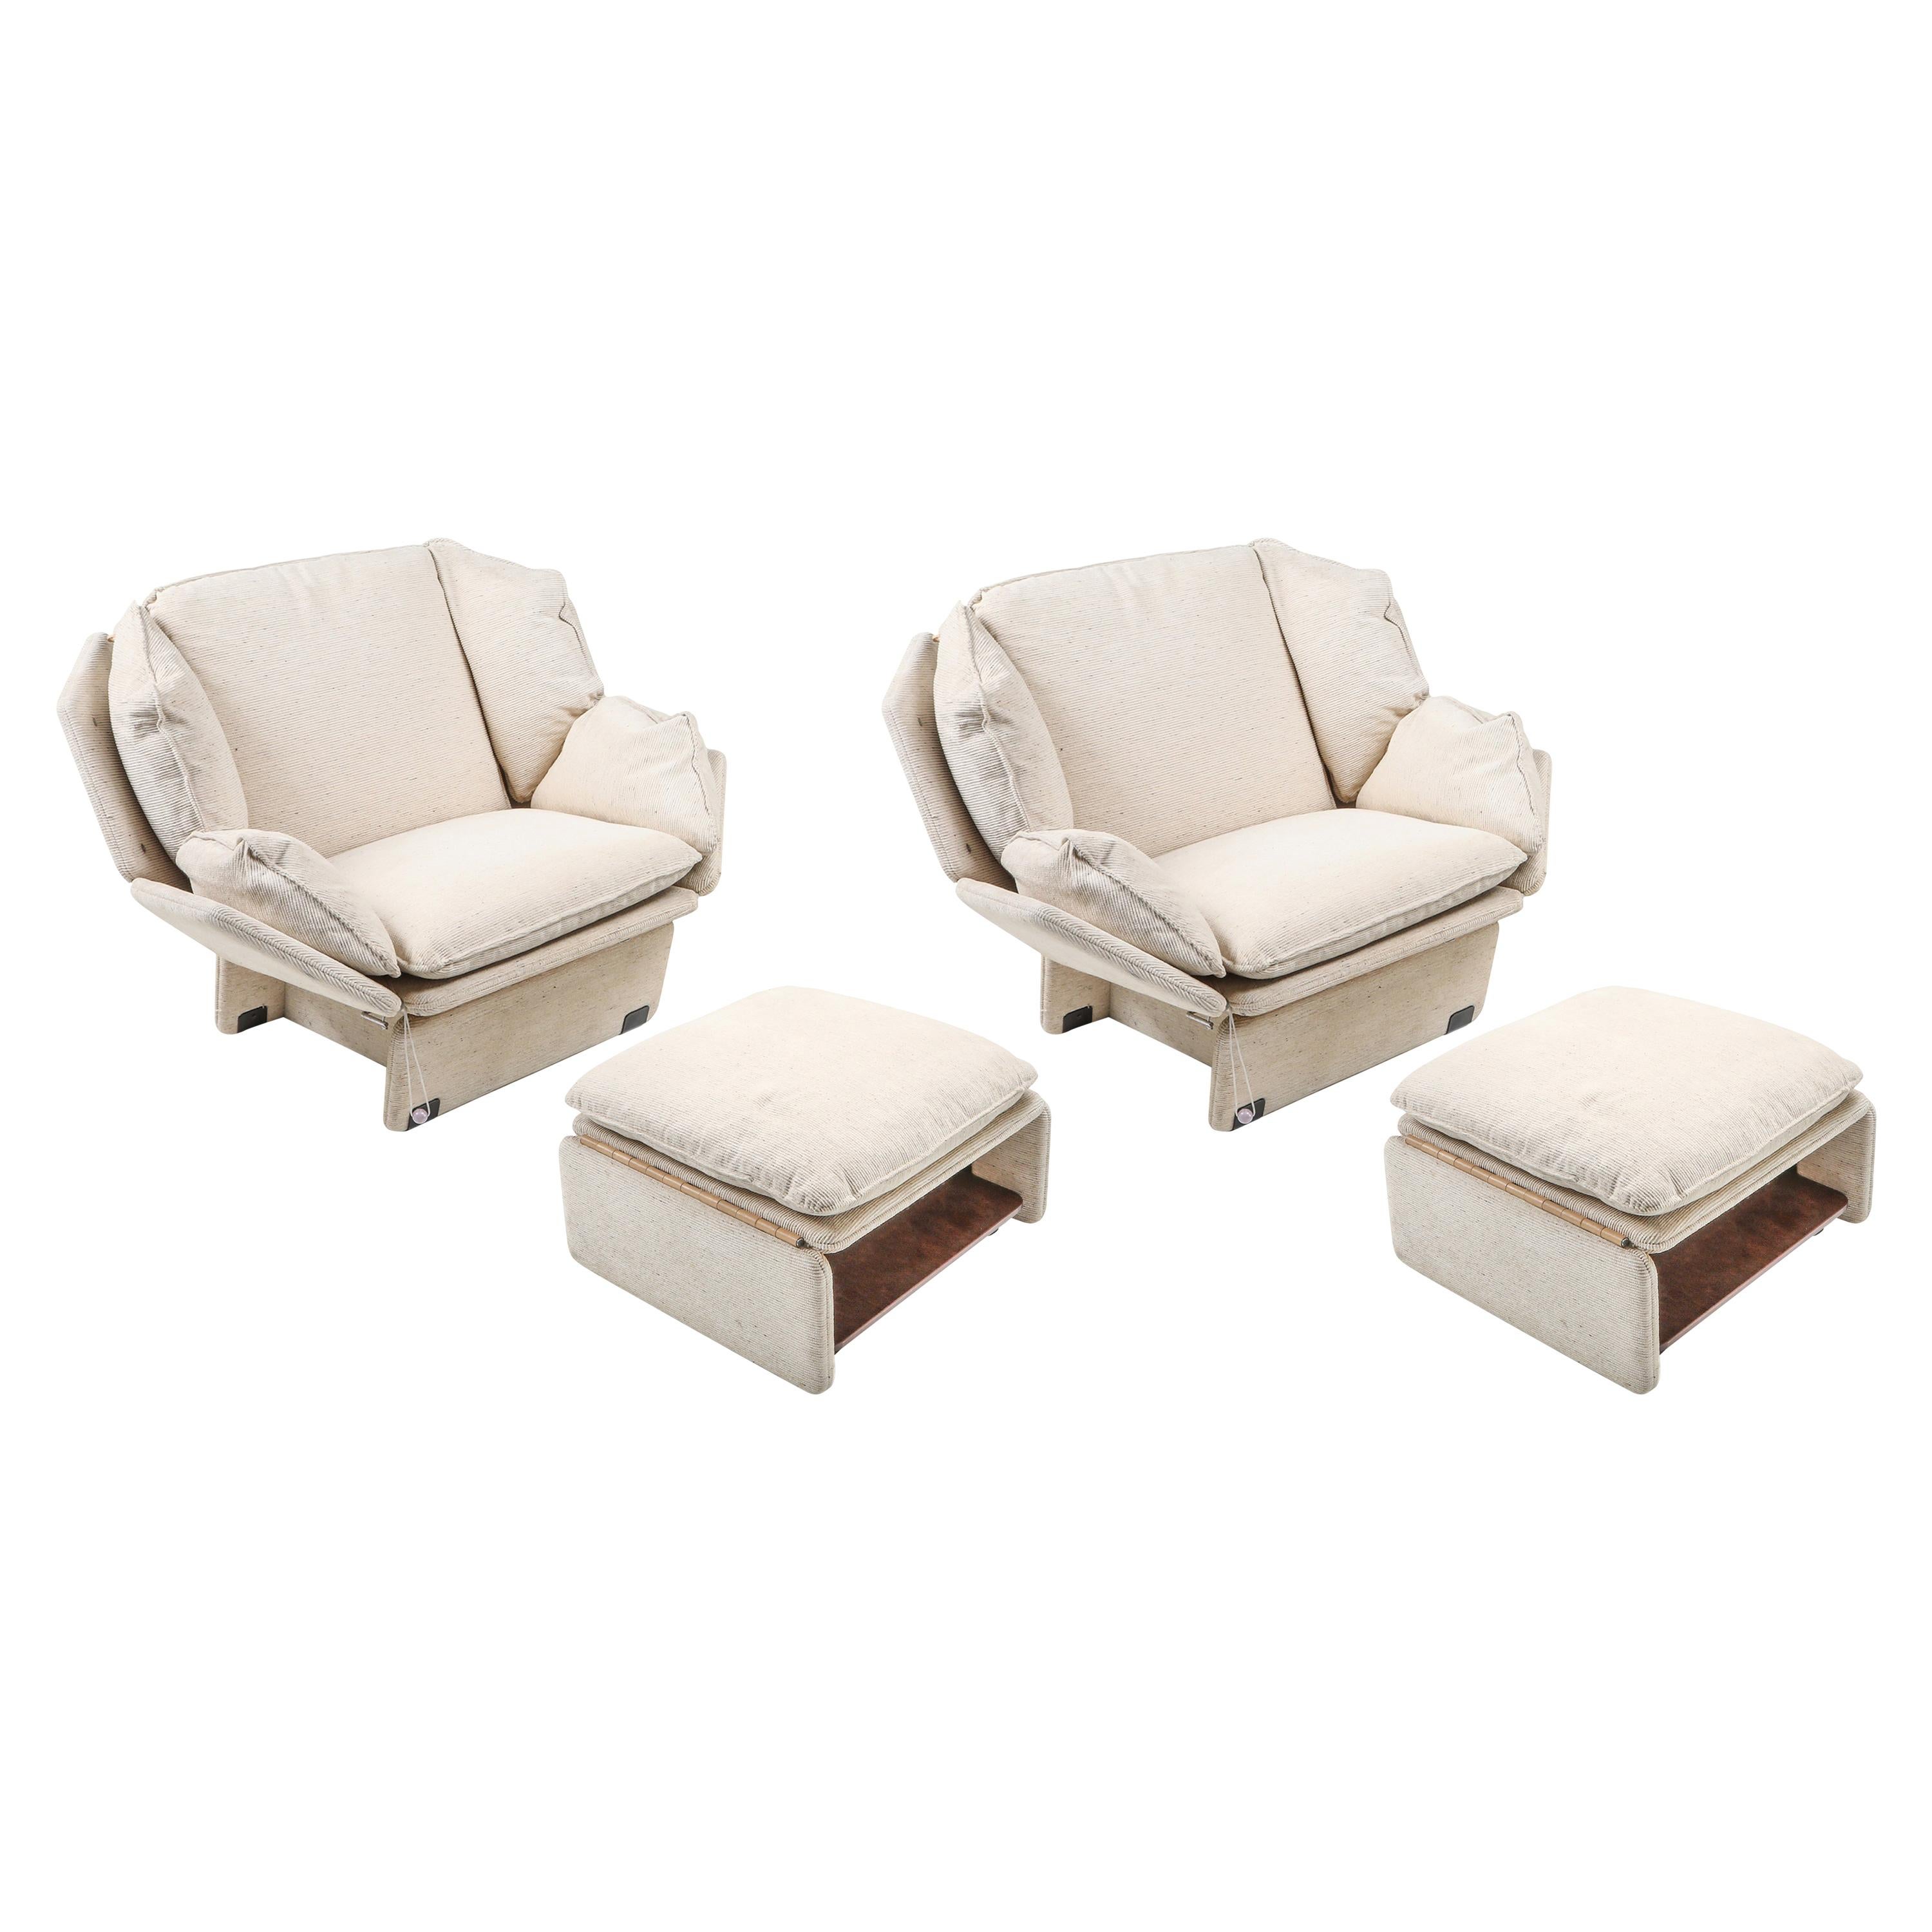 John Lautner Style Pair of Lounge Chairs in Cream Wool